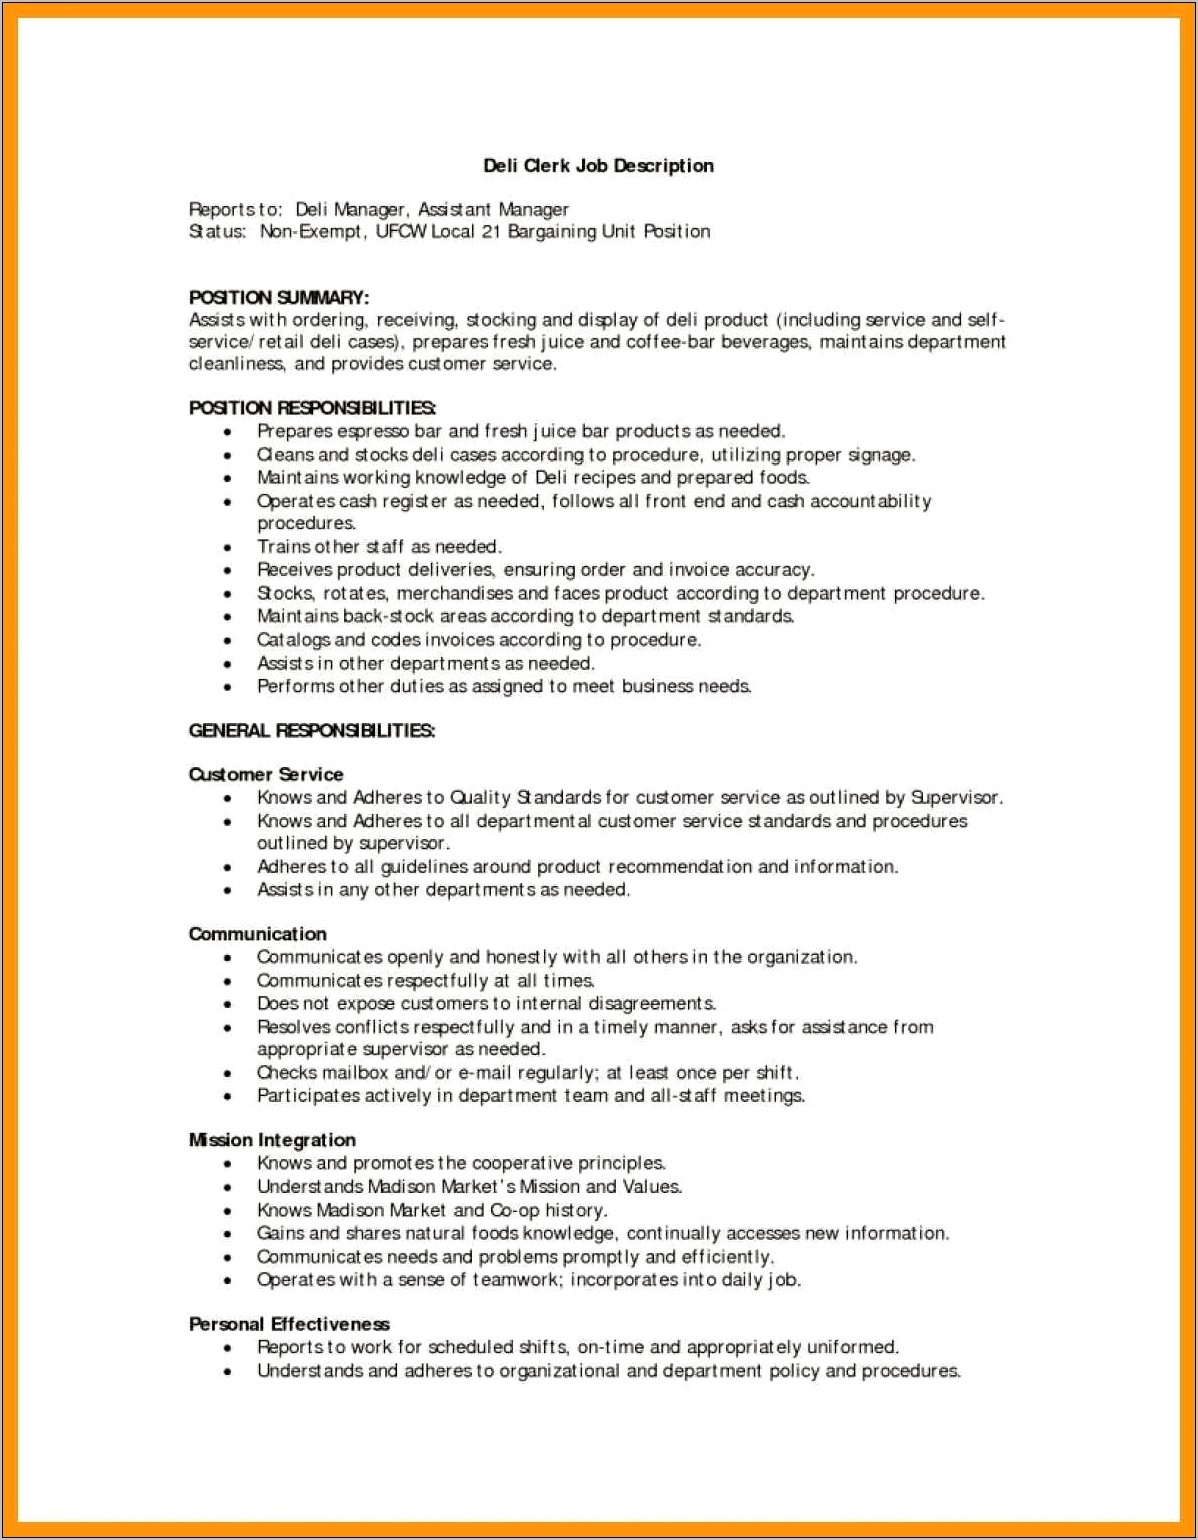 Assistant Supervisor Job Description For Resume